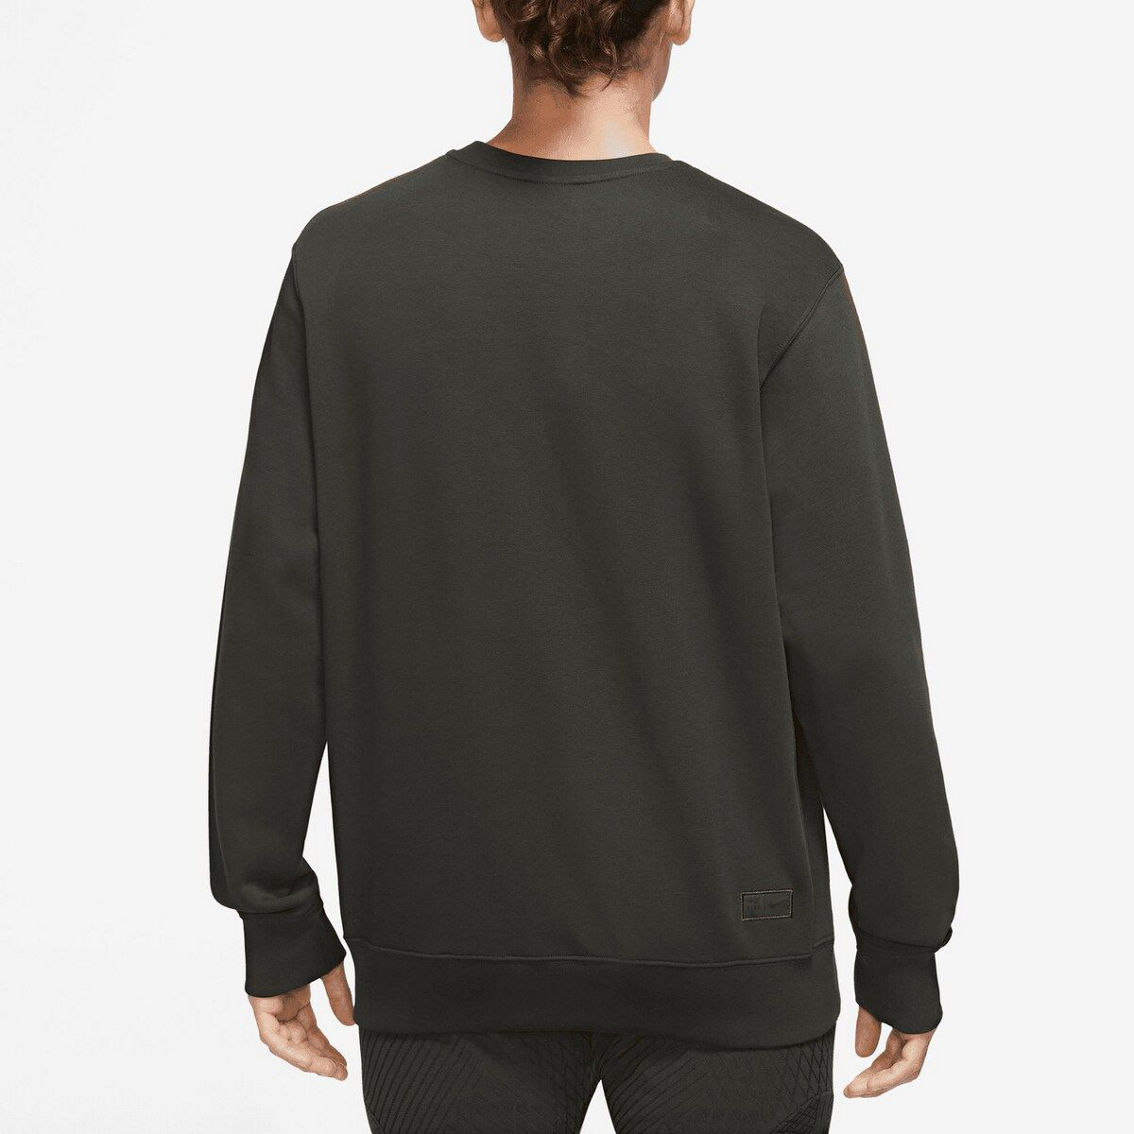 Nike Men's Olive Barcelona Club Pullover Sweatshirt - Image 3 of 4